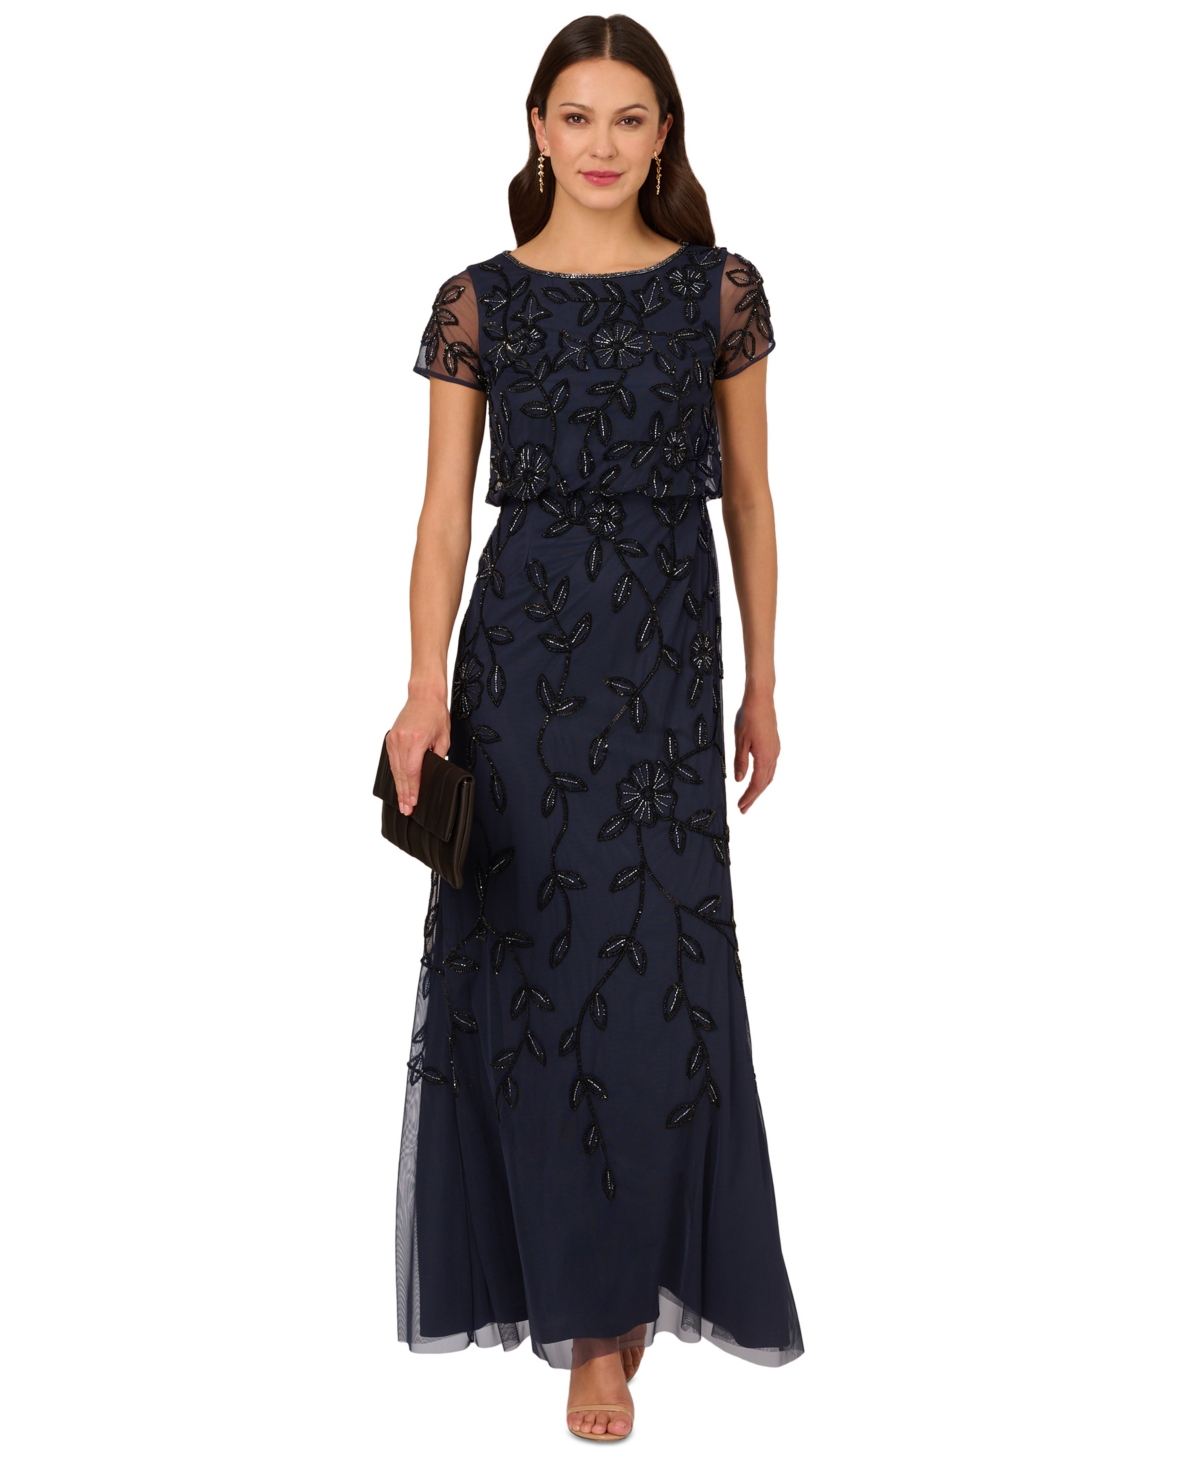 Women's Floral Bead Embellished Blouson Short-Sleeve Gown - Navy Black